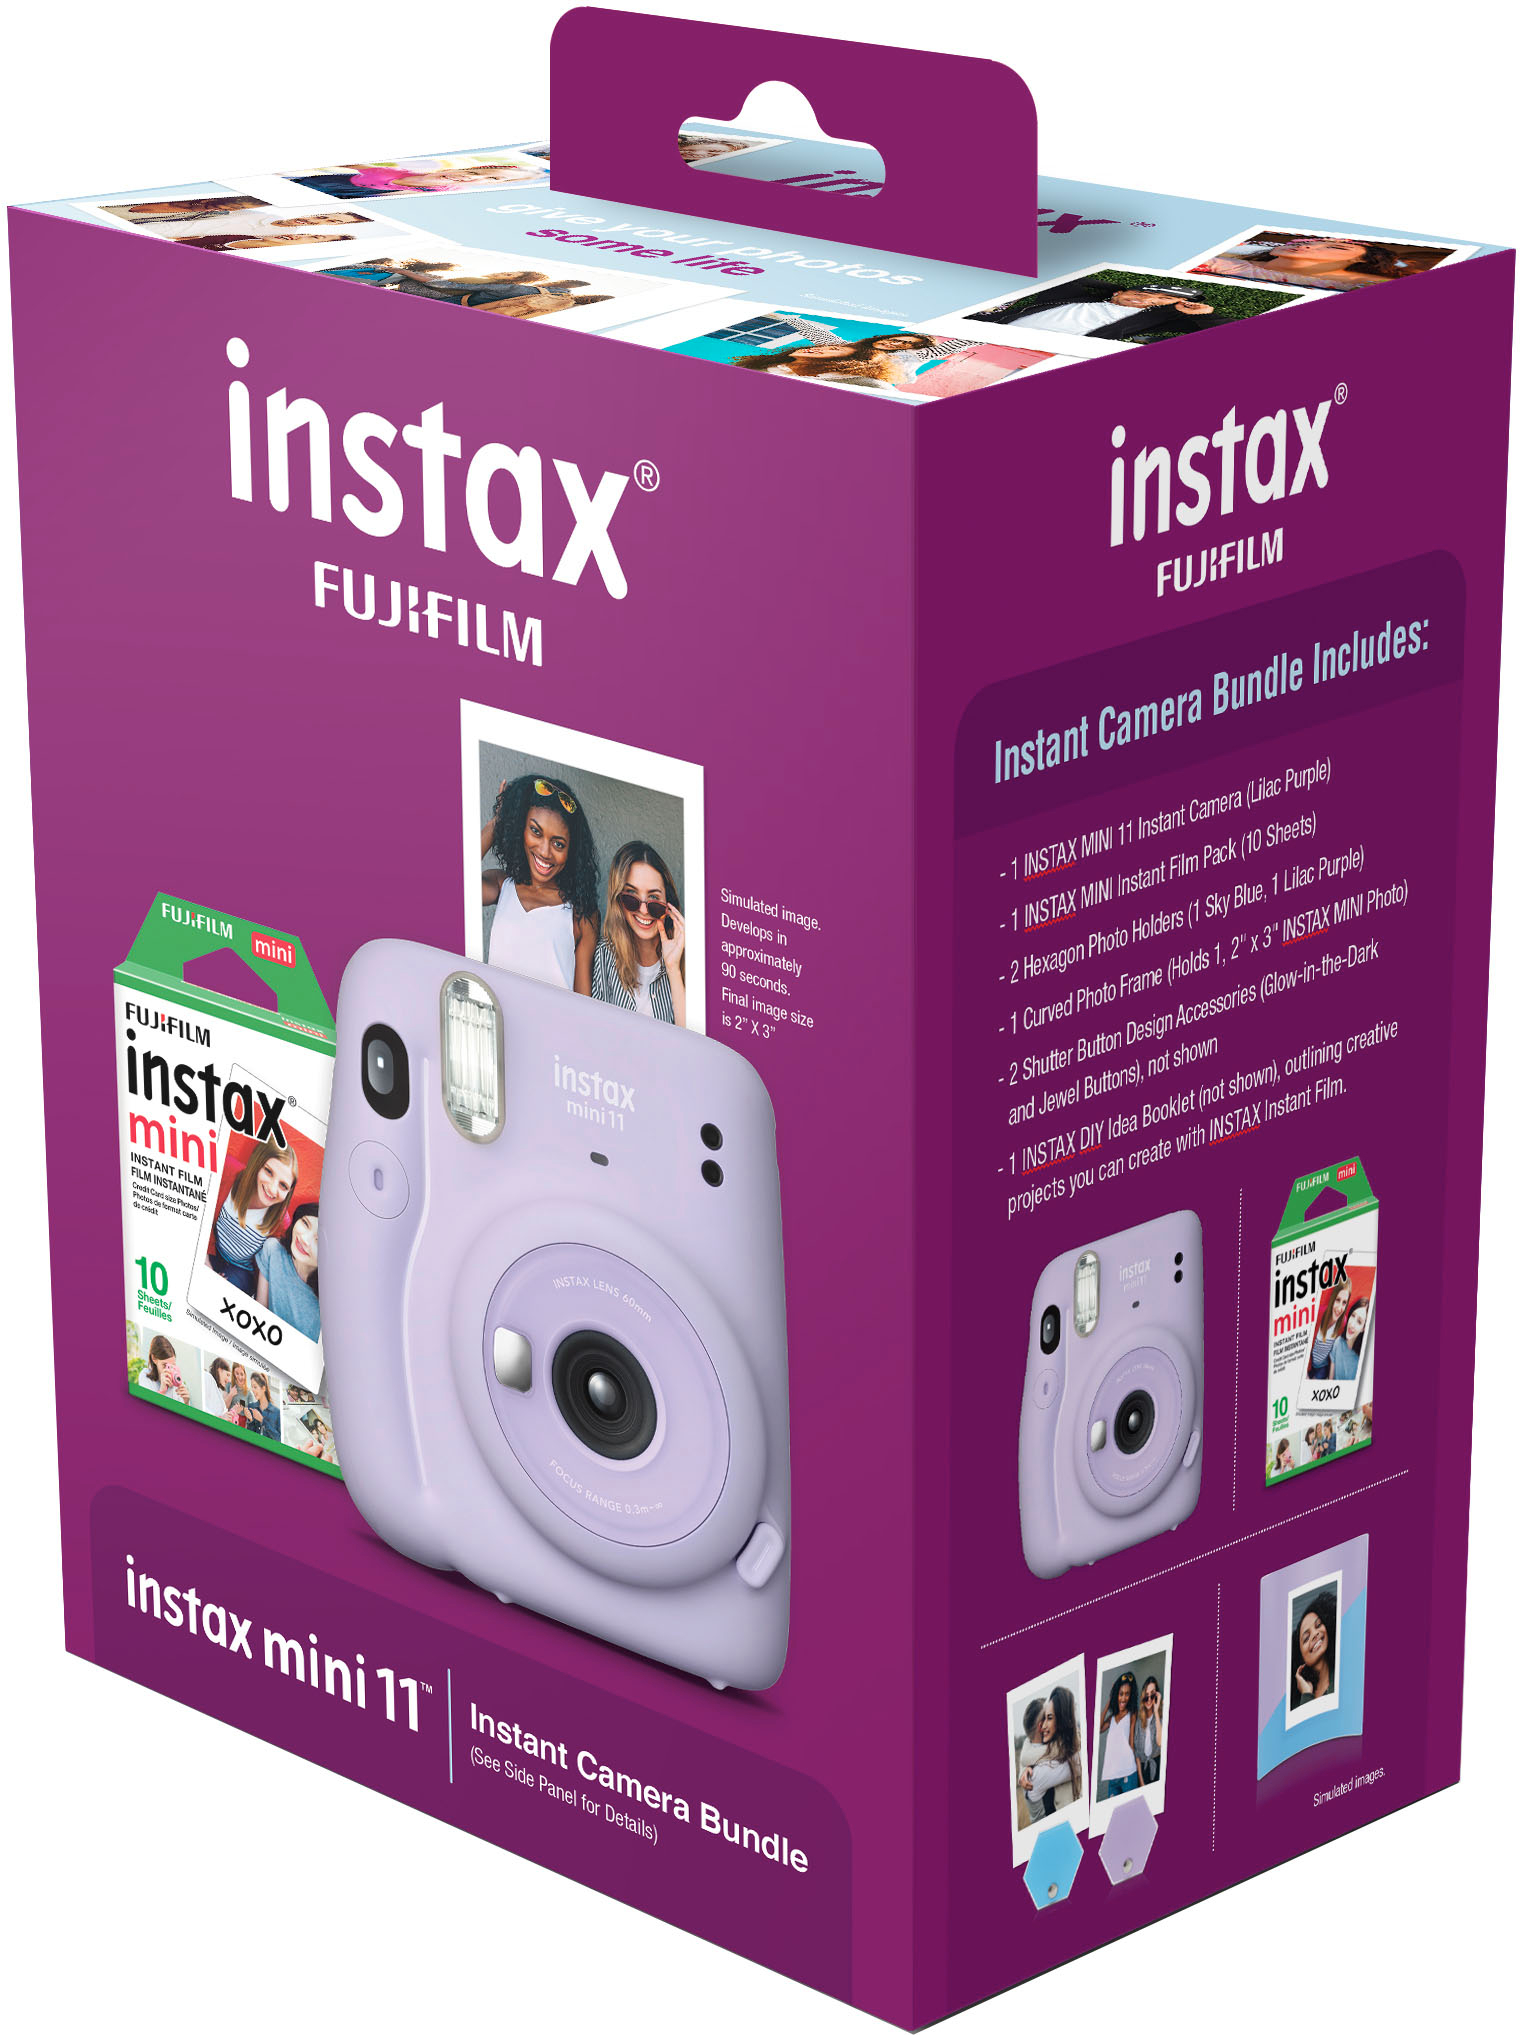 Fujifilm Instax Pal is an adorable tiny camera for cute photos - Dexerto